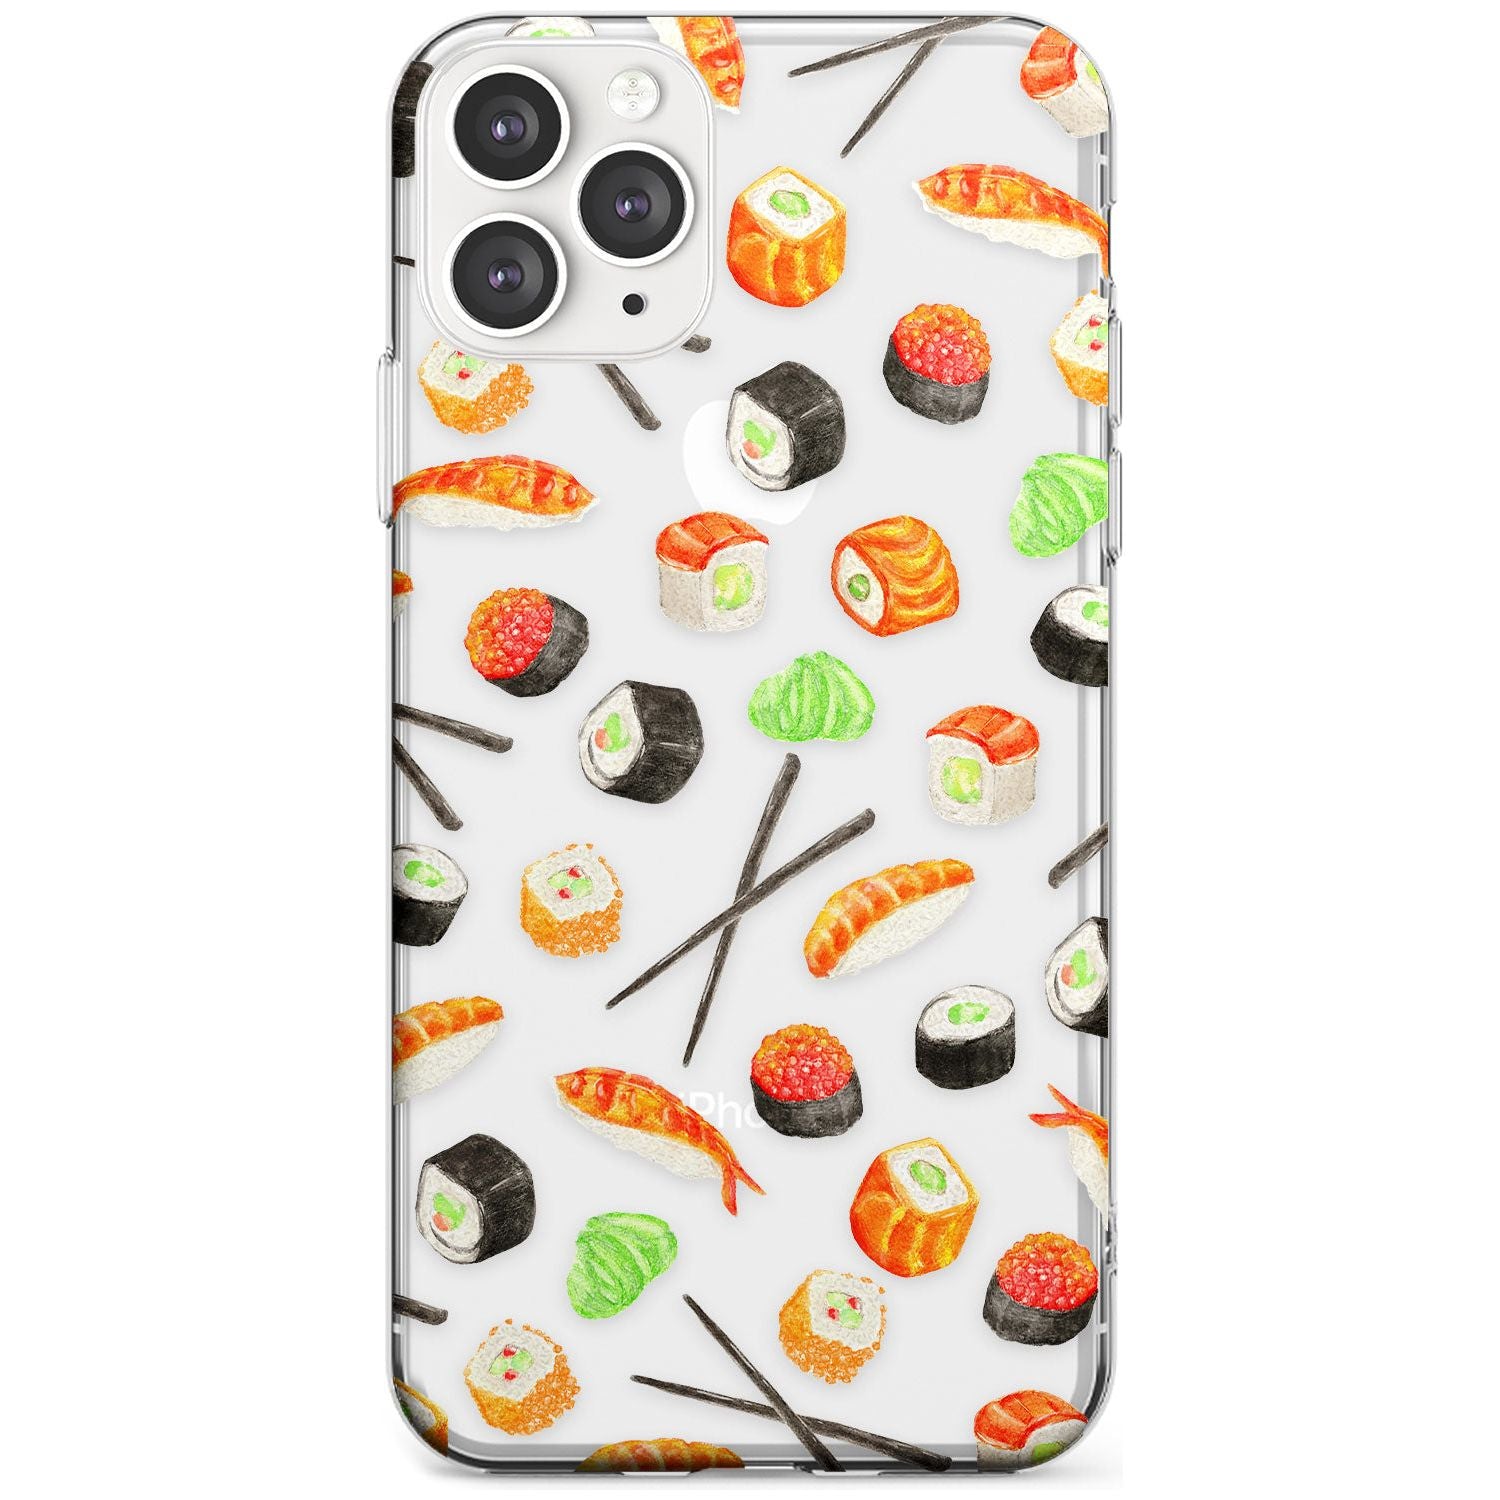 Sushi & Chopsticks Watercolour Pattern Slim TPU Phone Case for iPhone 11 Pro Max